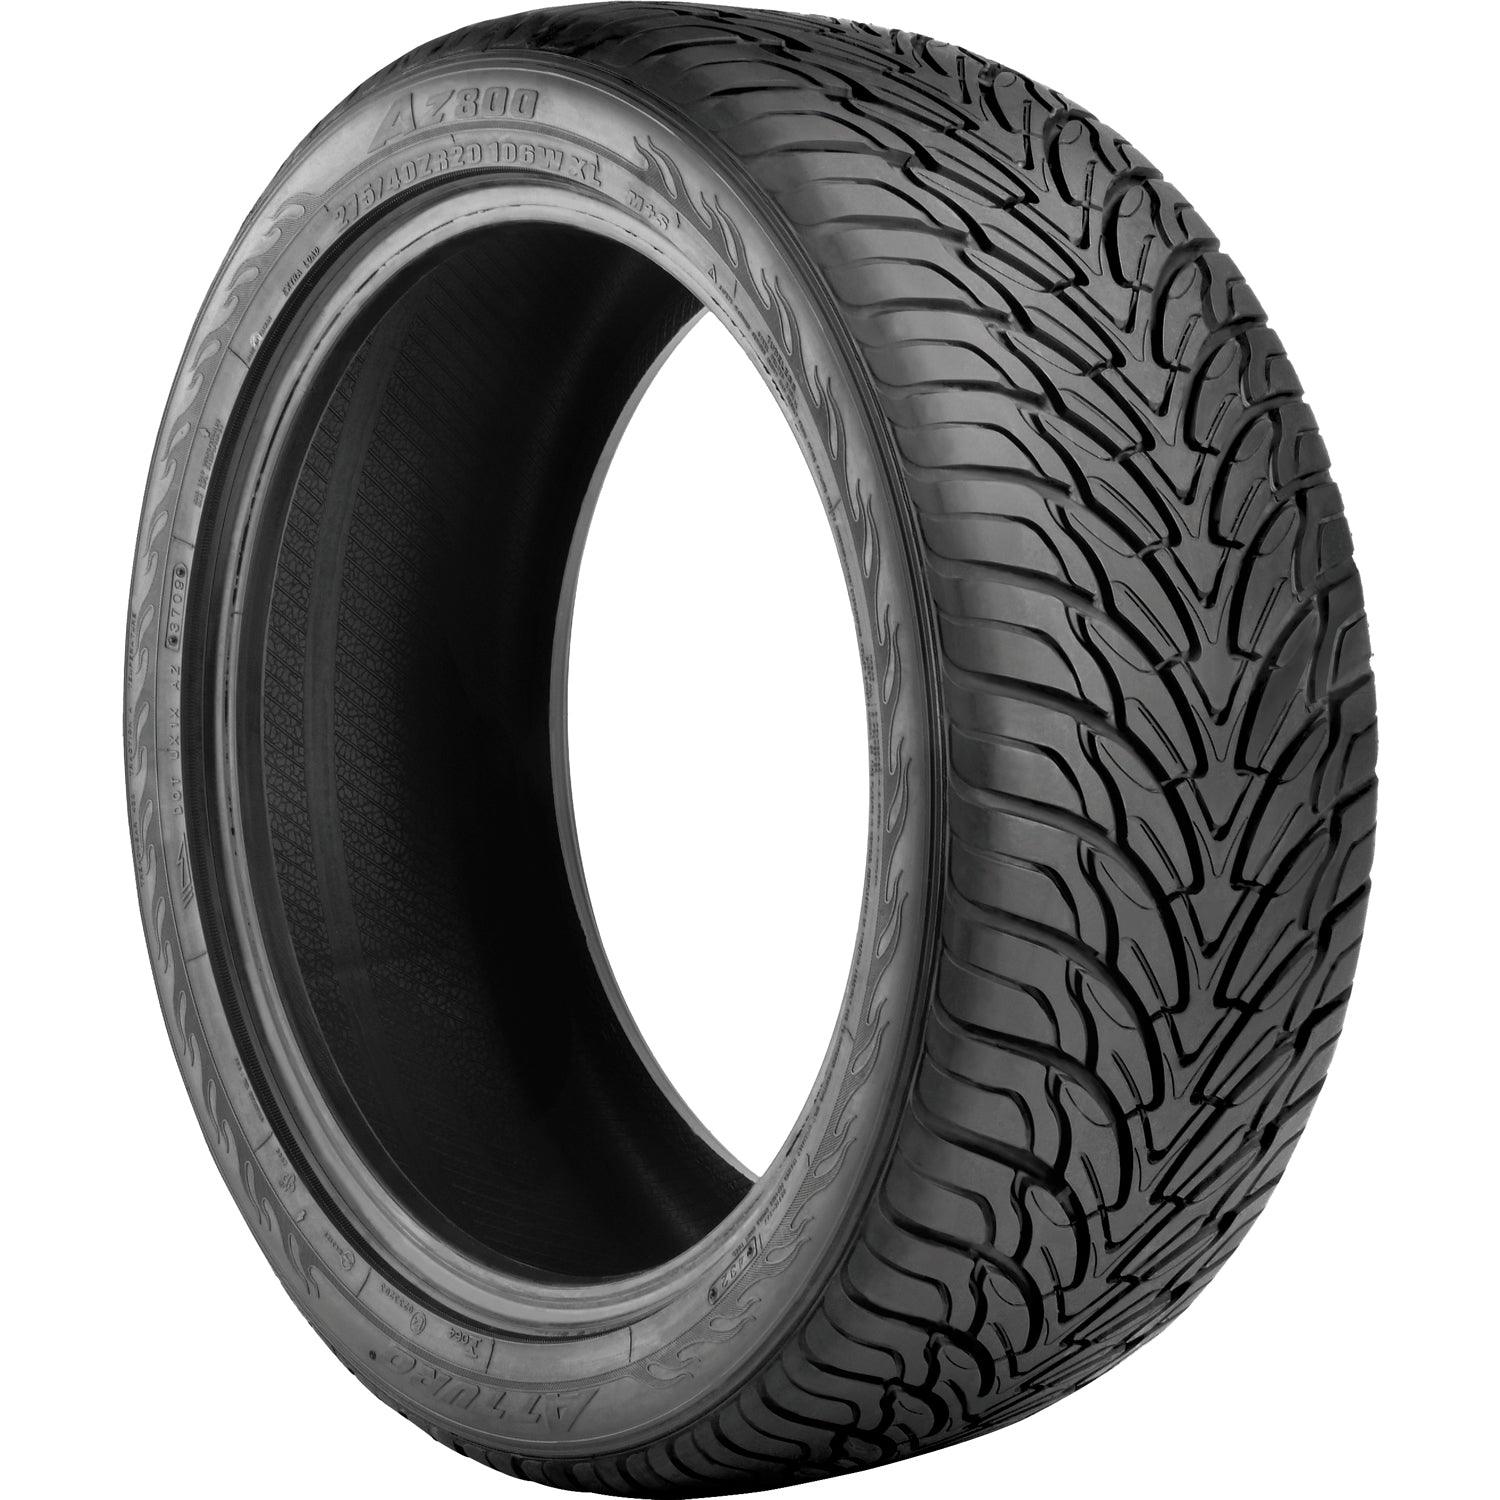 ATTURO AZ800 235/65R17 (29.1X9.4R 17) Tires